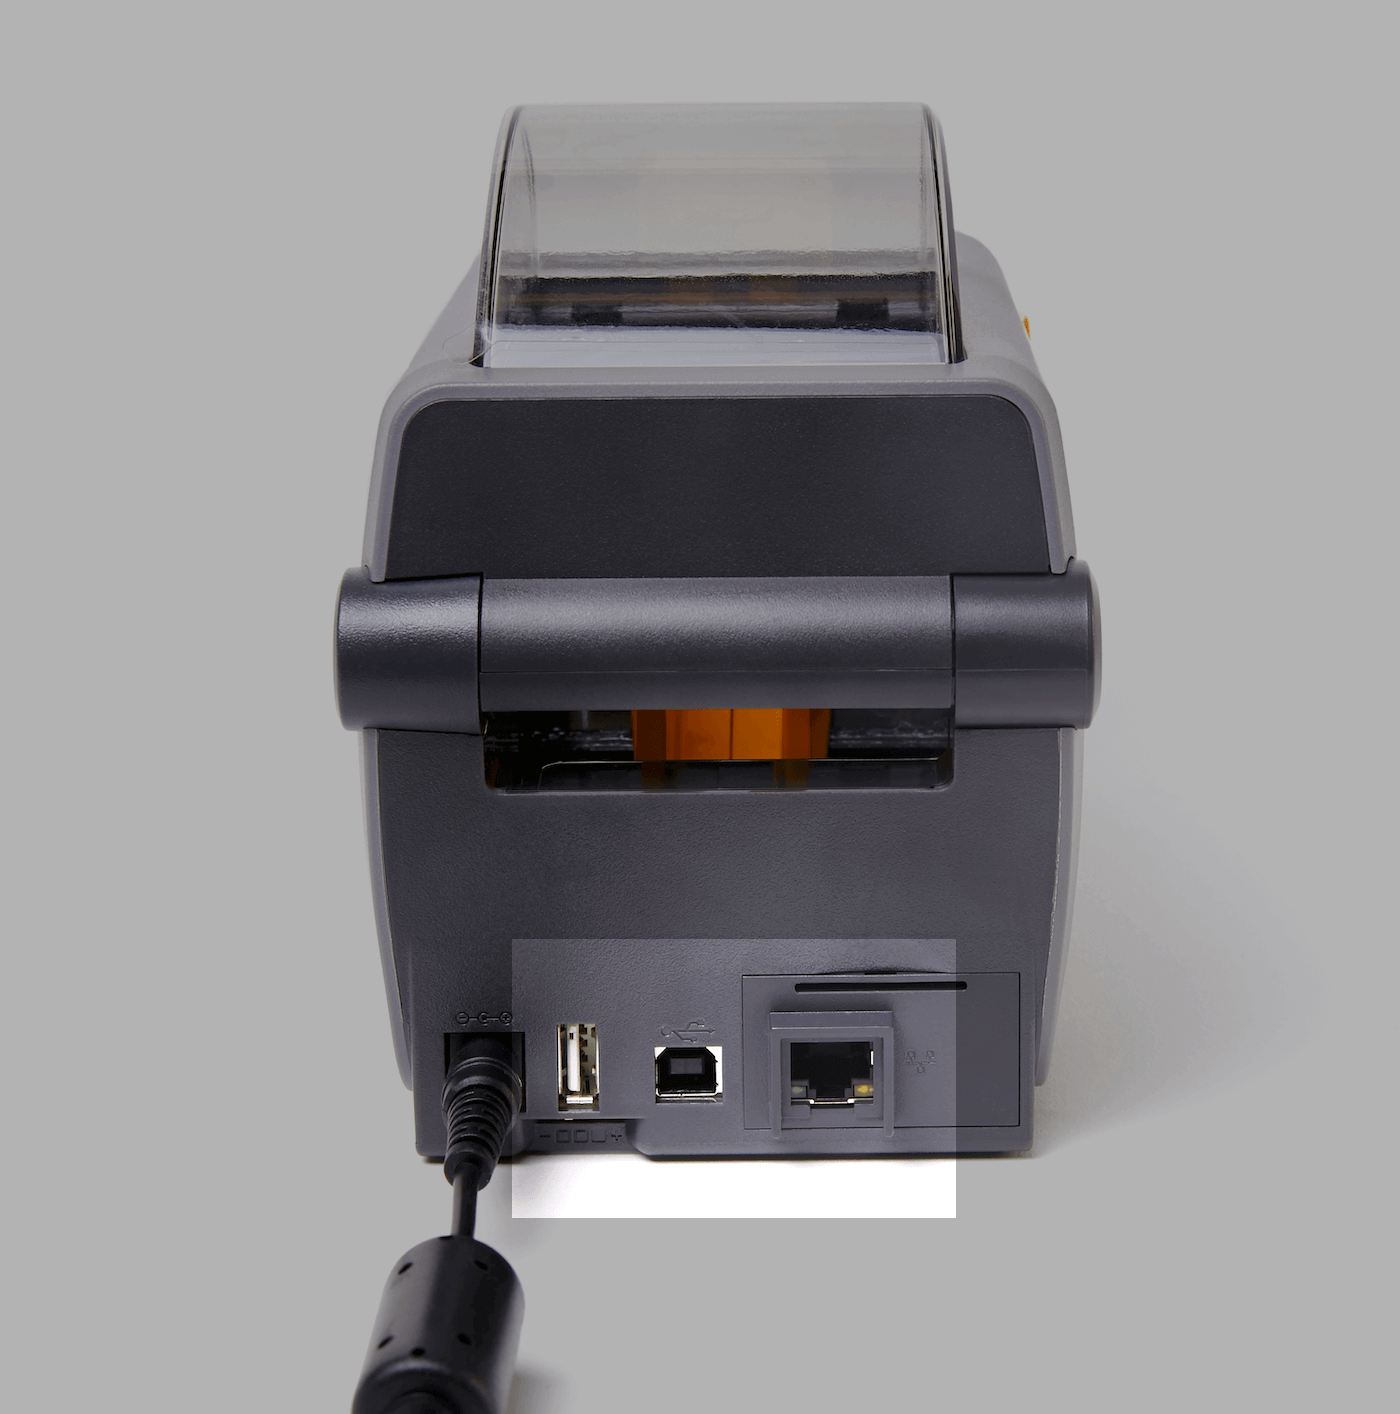 Retail - Label printer back - USB and LAN ports.png